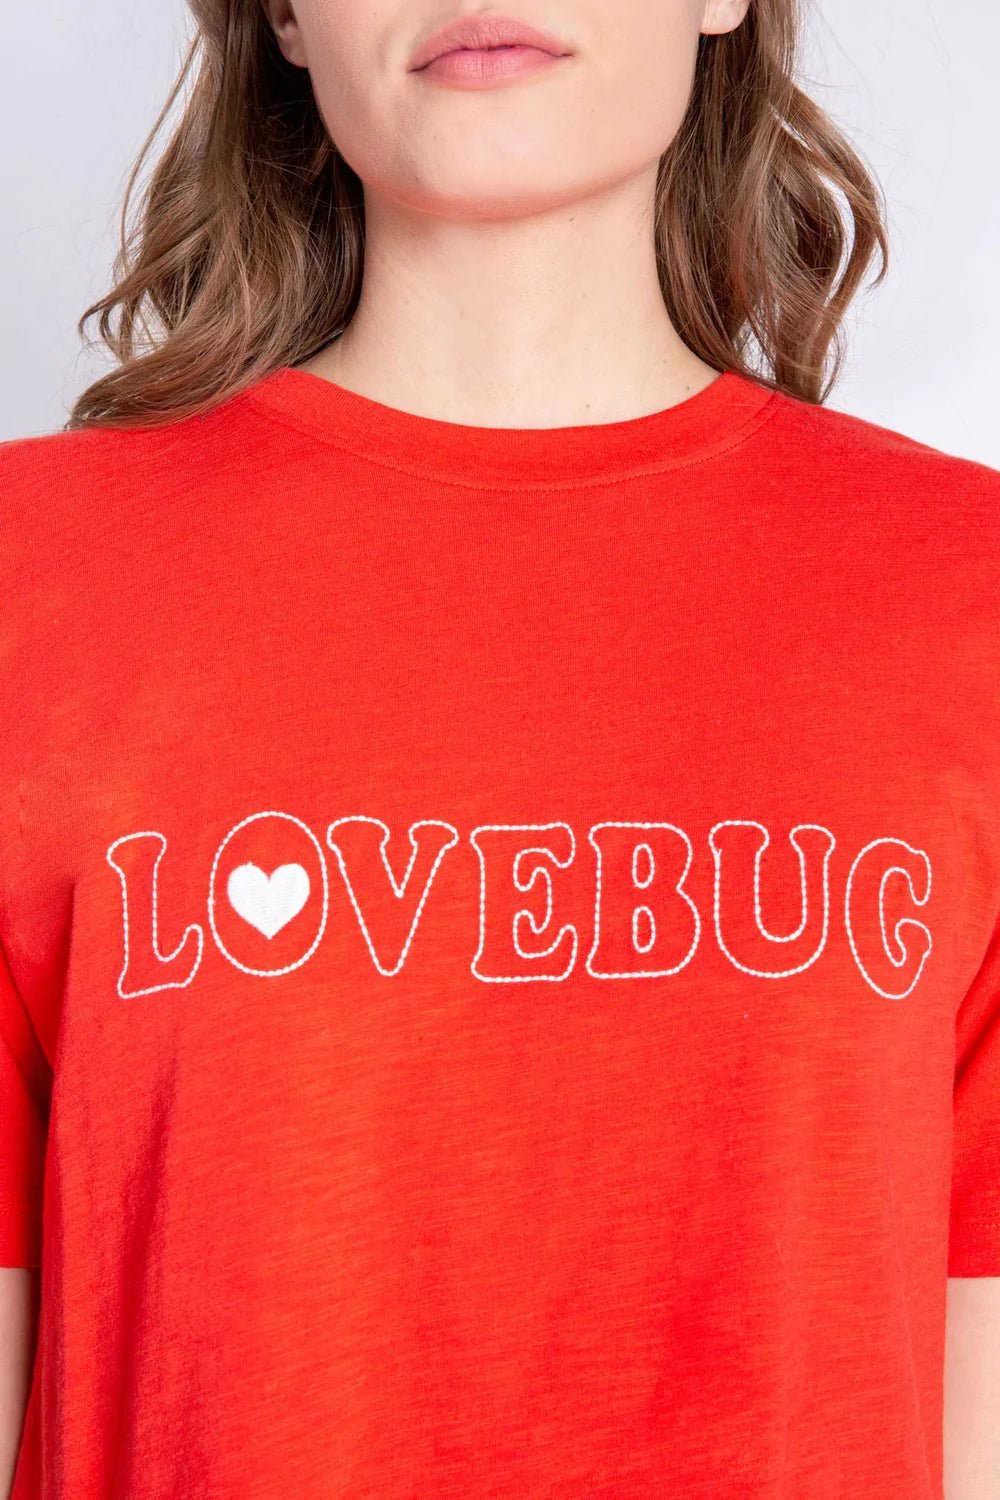 PJ Salvage Lovebug Red Cotton T-Shirt product